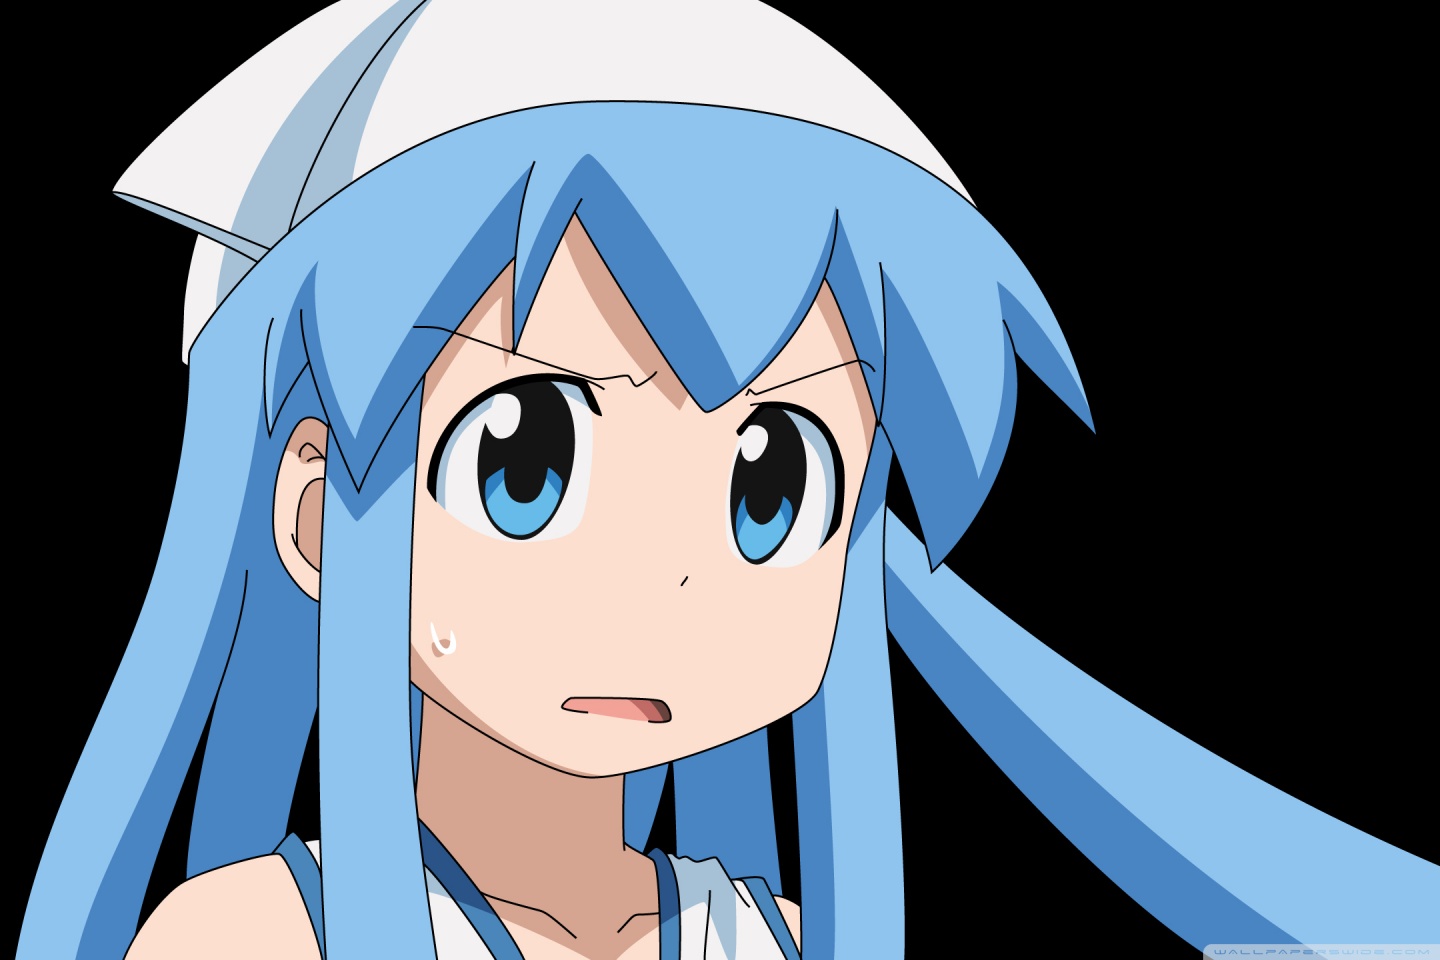 Anime Angry Girl With Blue Hair Ultra HD Desktop Background Wallpaper for 4K UHD TV, Widescreen & UltraWide Desktop & Laptop, Tablet